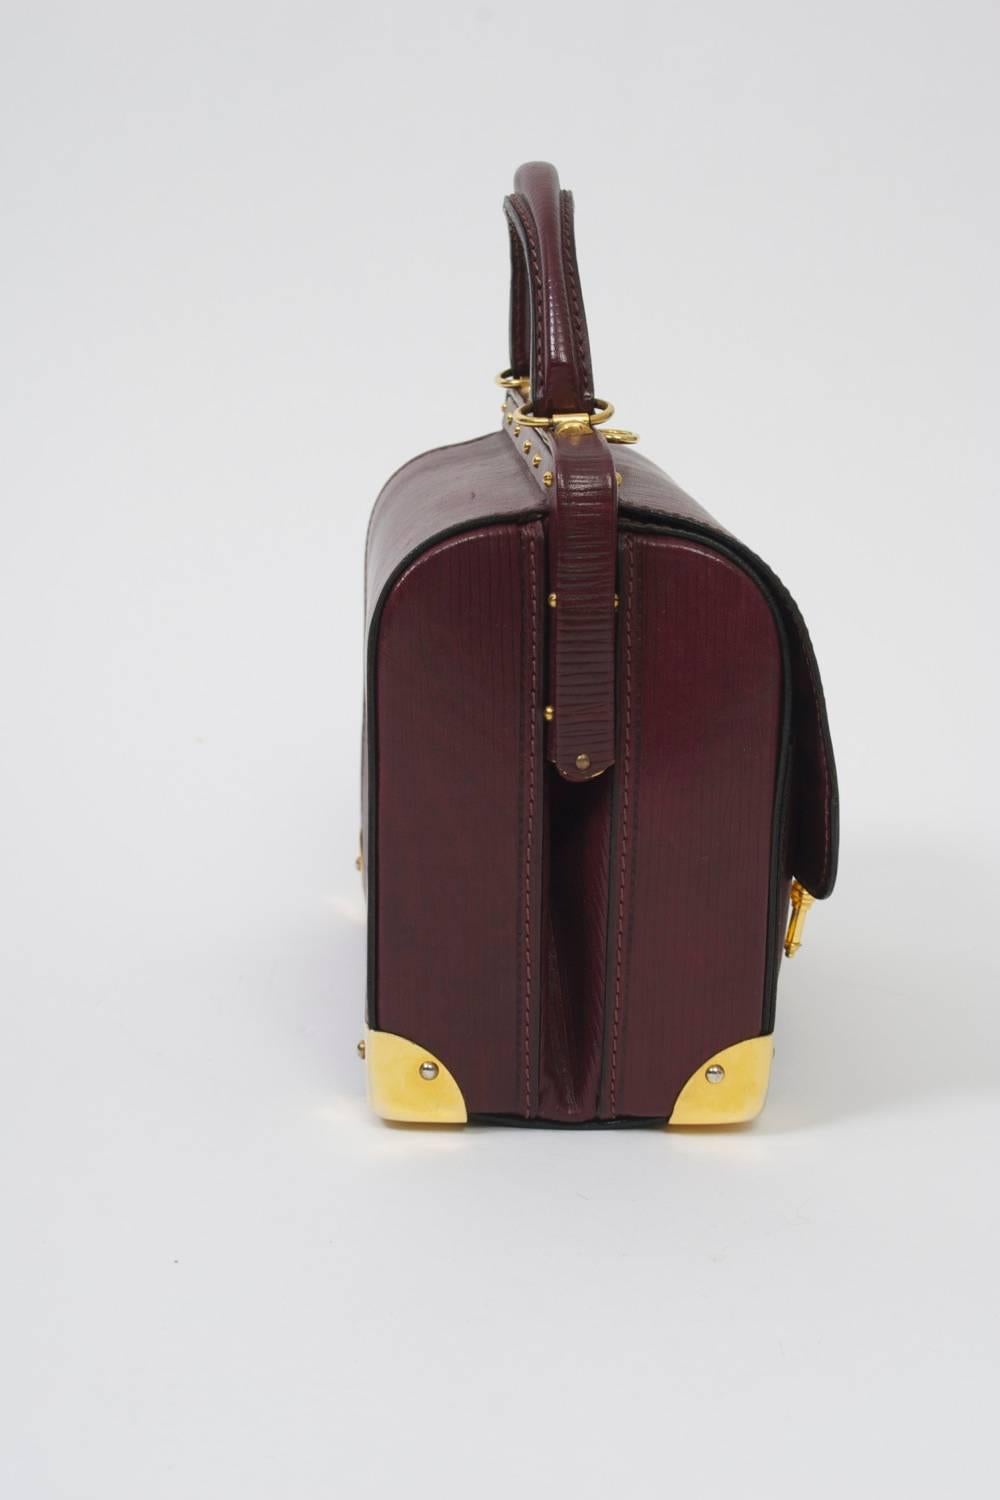 Black Roberta di Camerino Handbag with Gold Hardware